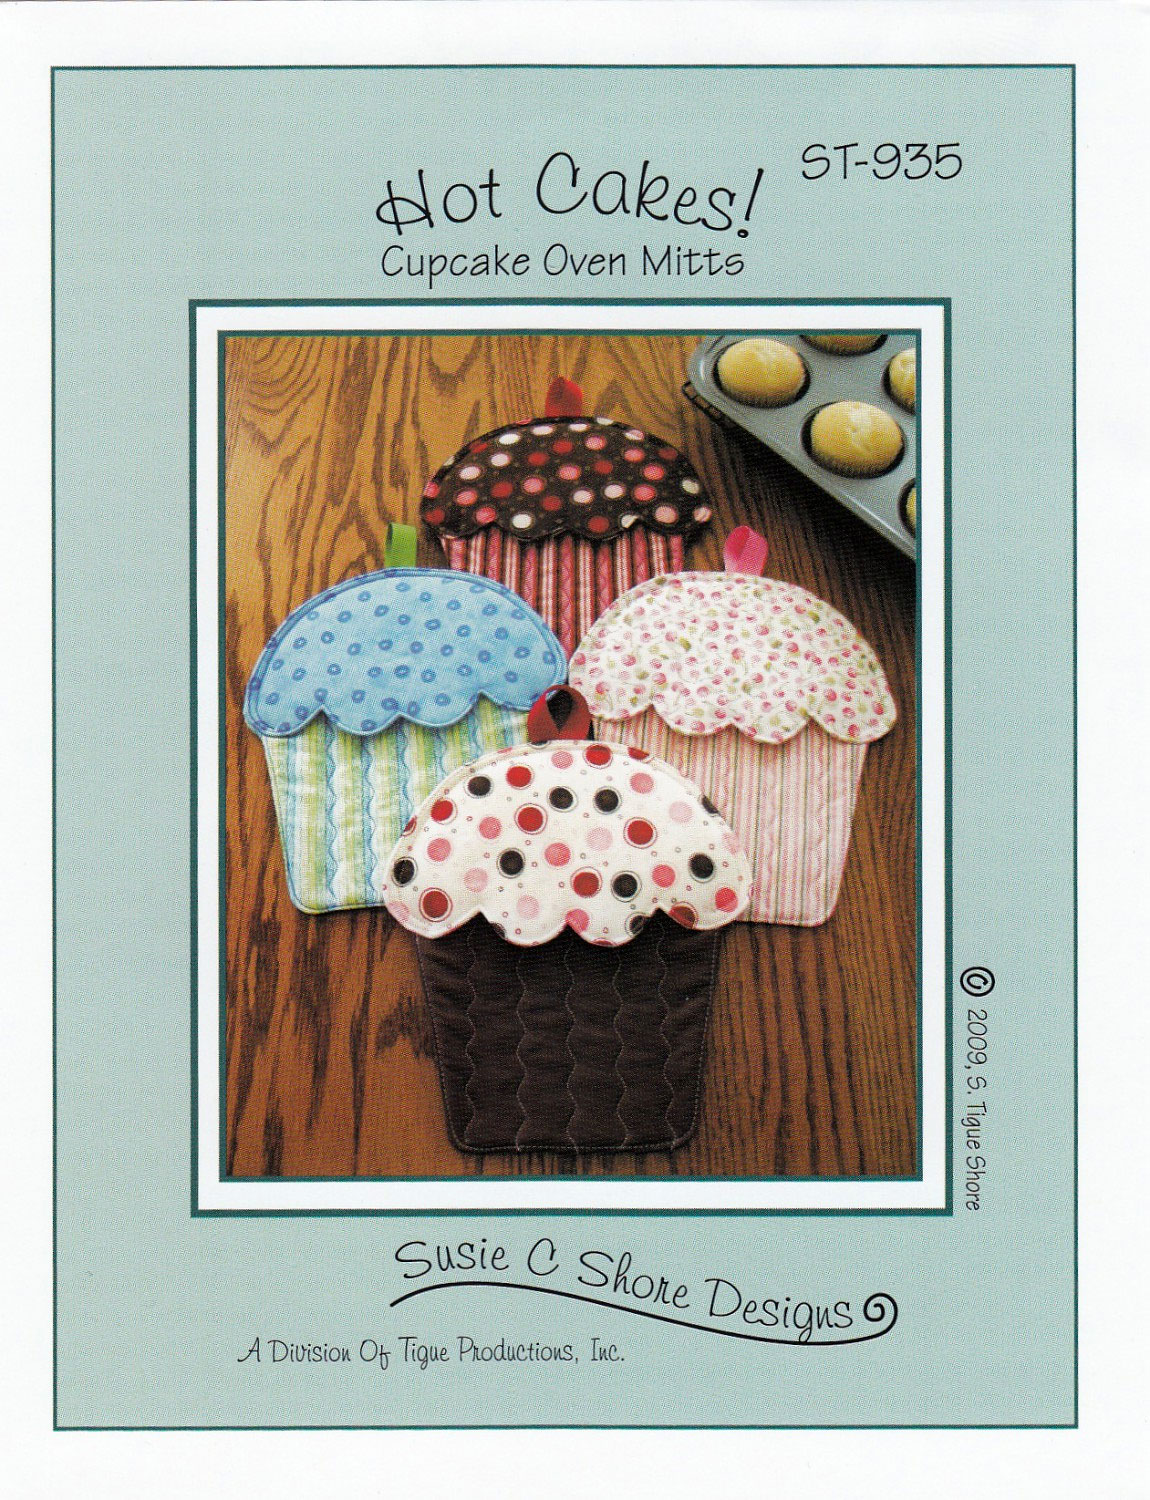 https://www.sewthankful.com/media/Susie_C_Shore_Designs/hot-cakes-pincushion-sewing-pattern-susie-c-shore-front.jpg